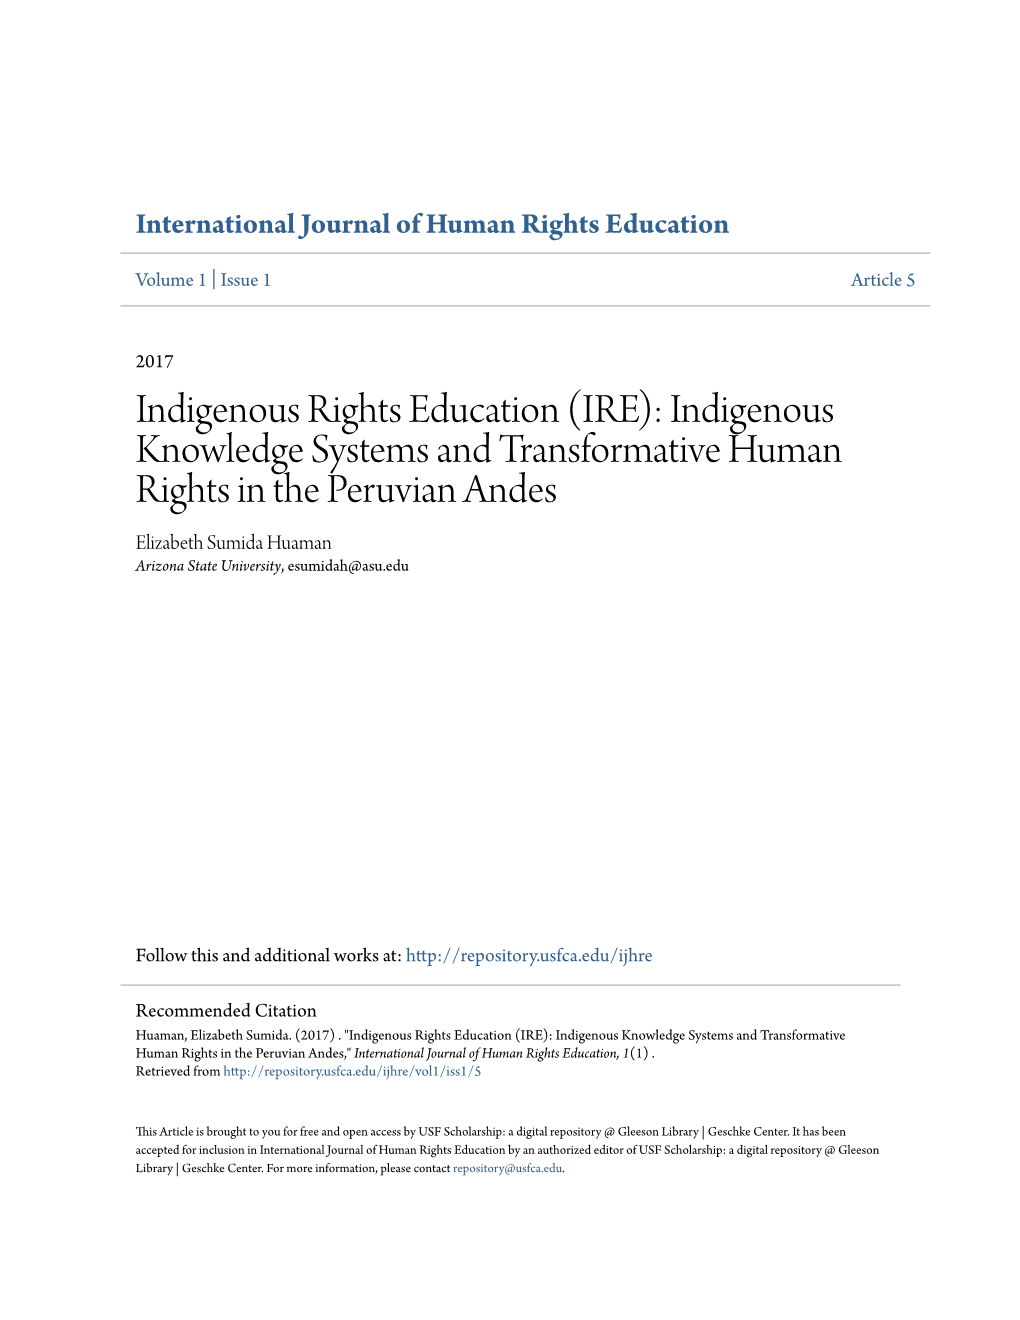 Indigenous Knowledge Systems and Transformative Human Rights in the Peruvian Andes Elizabeth Sumida Huaman Arizona State University, Esumidah@Asu.Edu